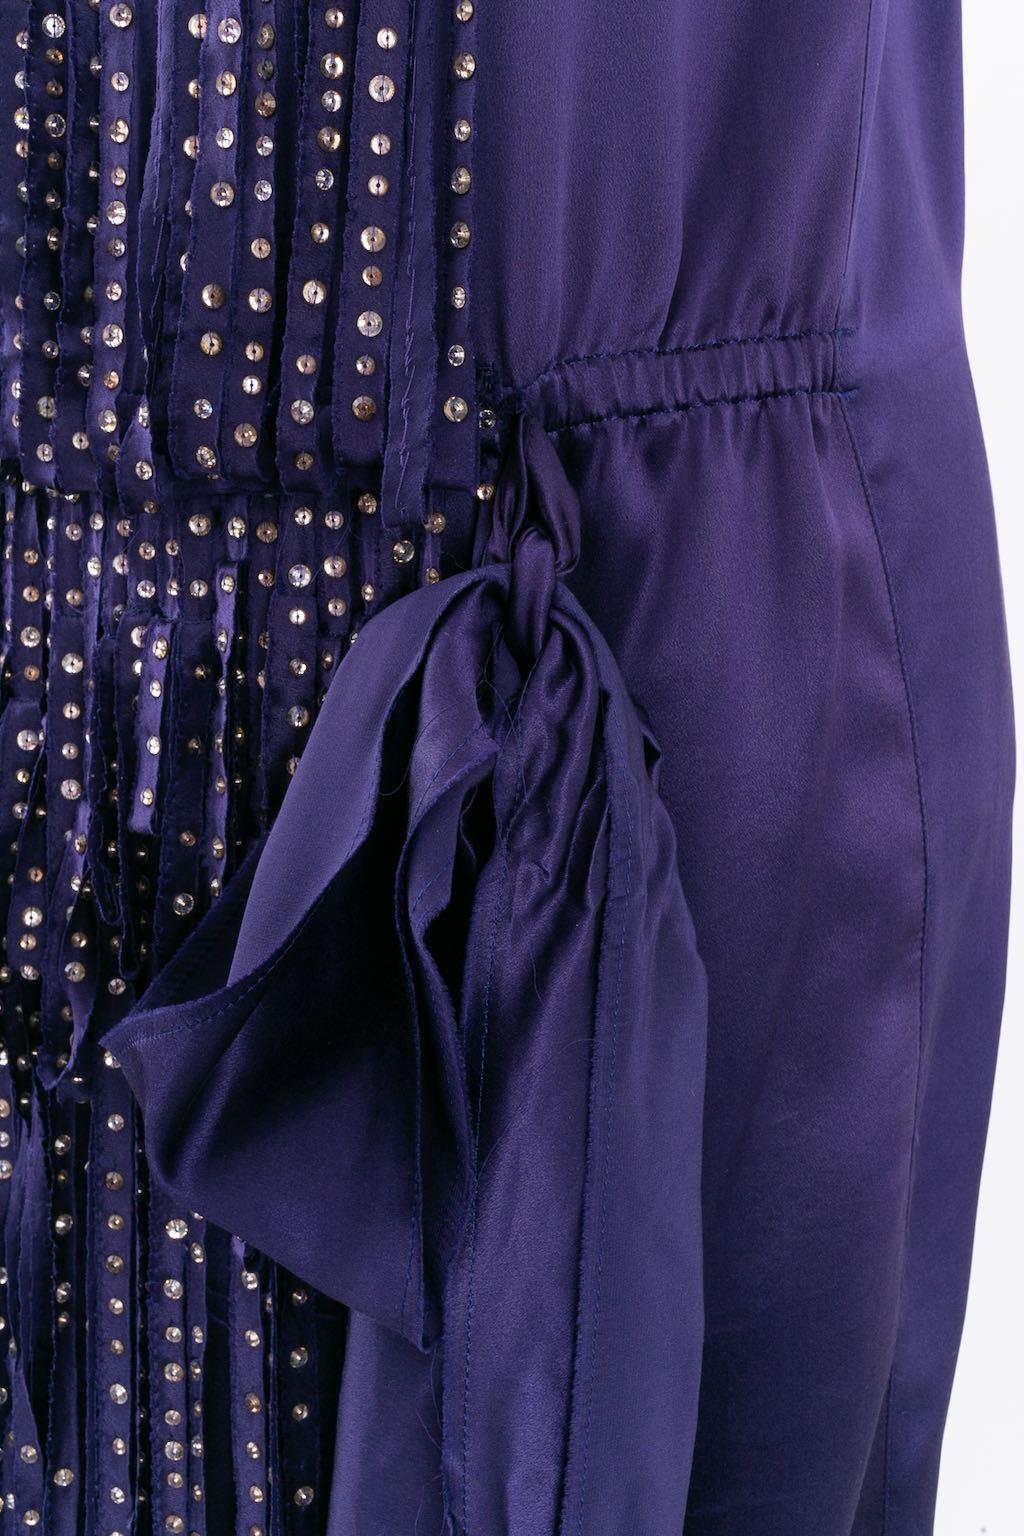 Lanvin Embellished Purple Silk Dress Winter Collection, 2004 For Sale 3